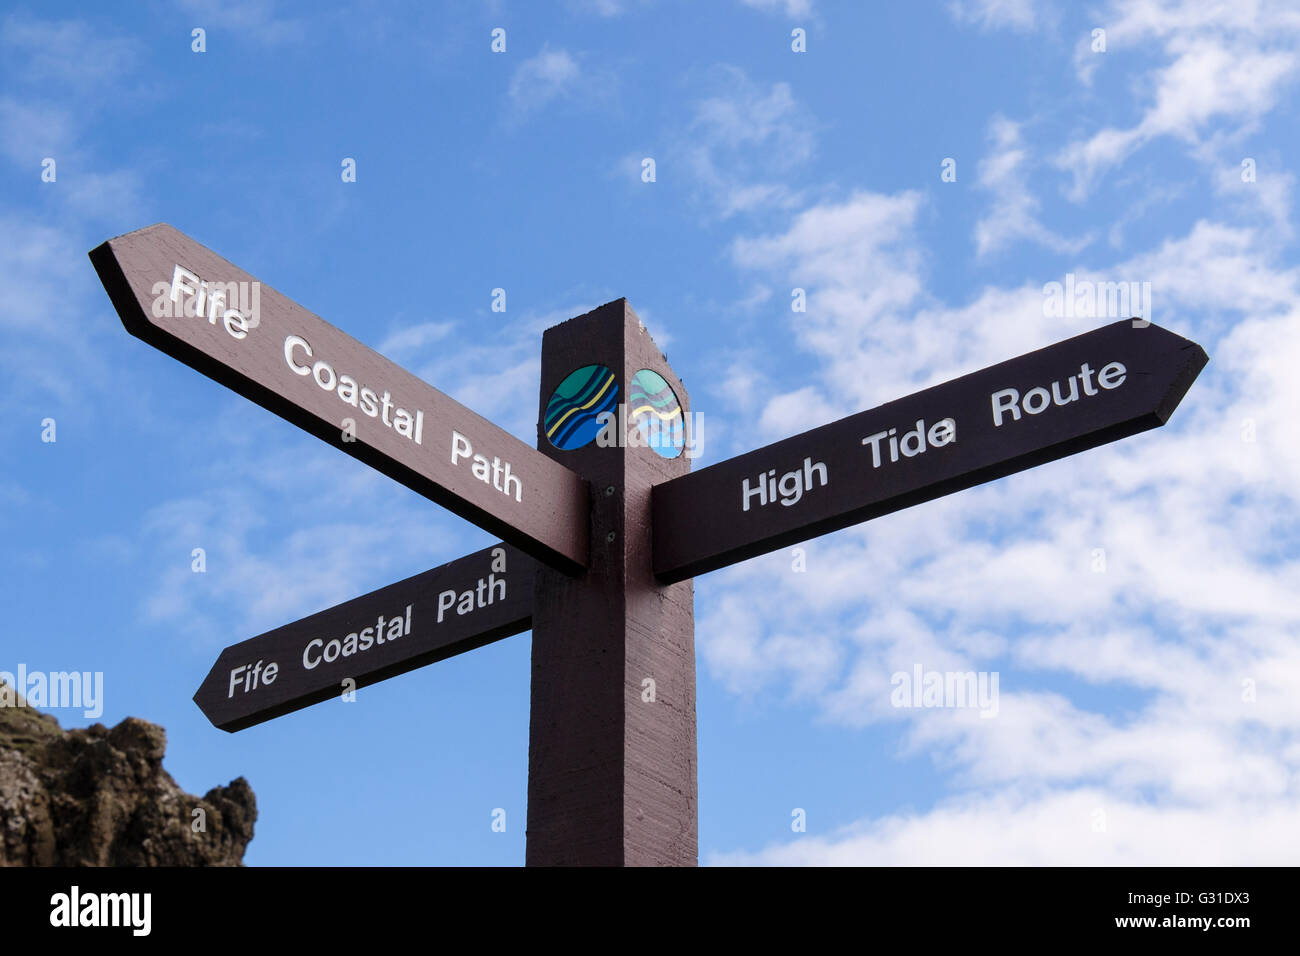 Fife Coastal Path 3-Wege Richtung Wegweiser in West Bay, Elie und Earlsferry, East Neuk, Fife, Schottland, UK, Großbritannien Stockfoto